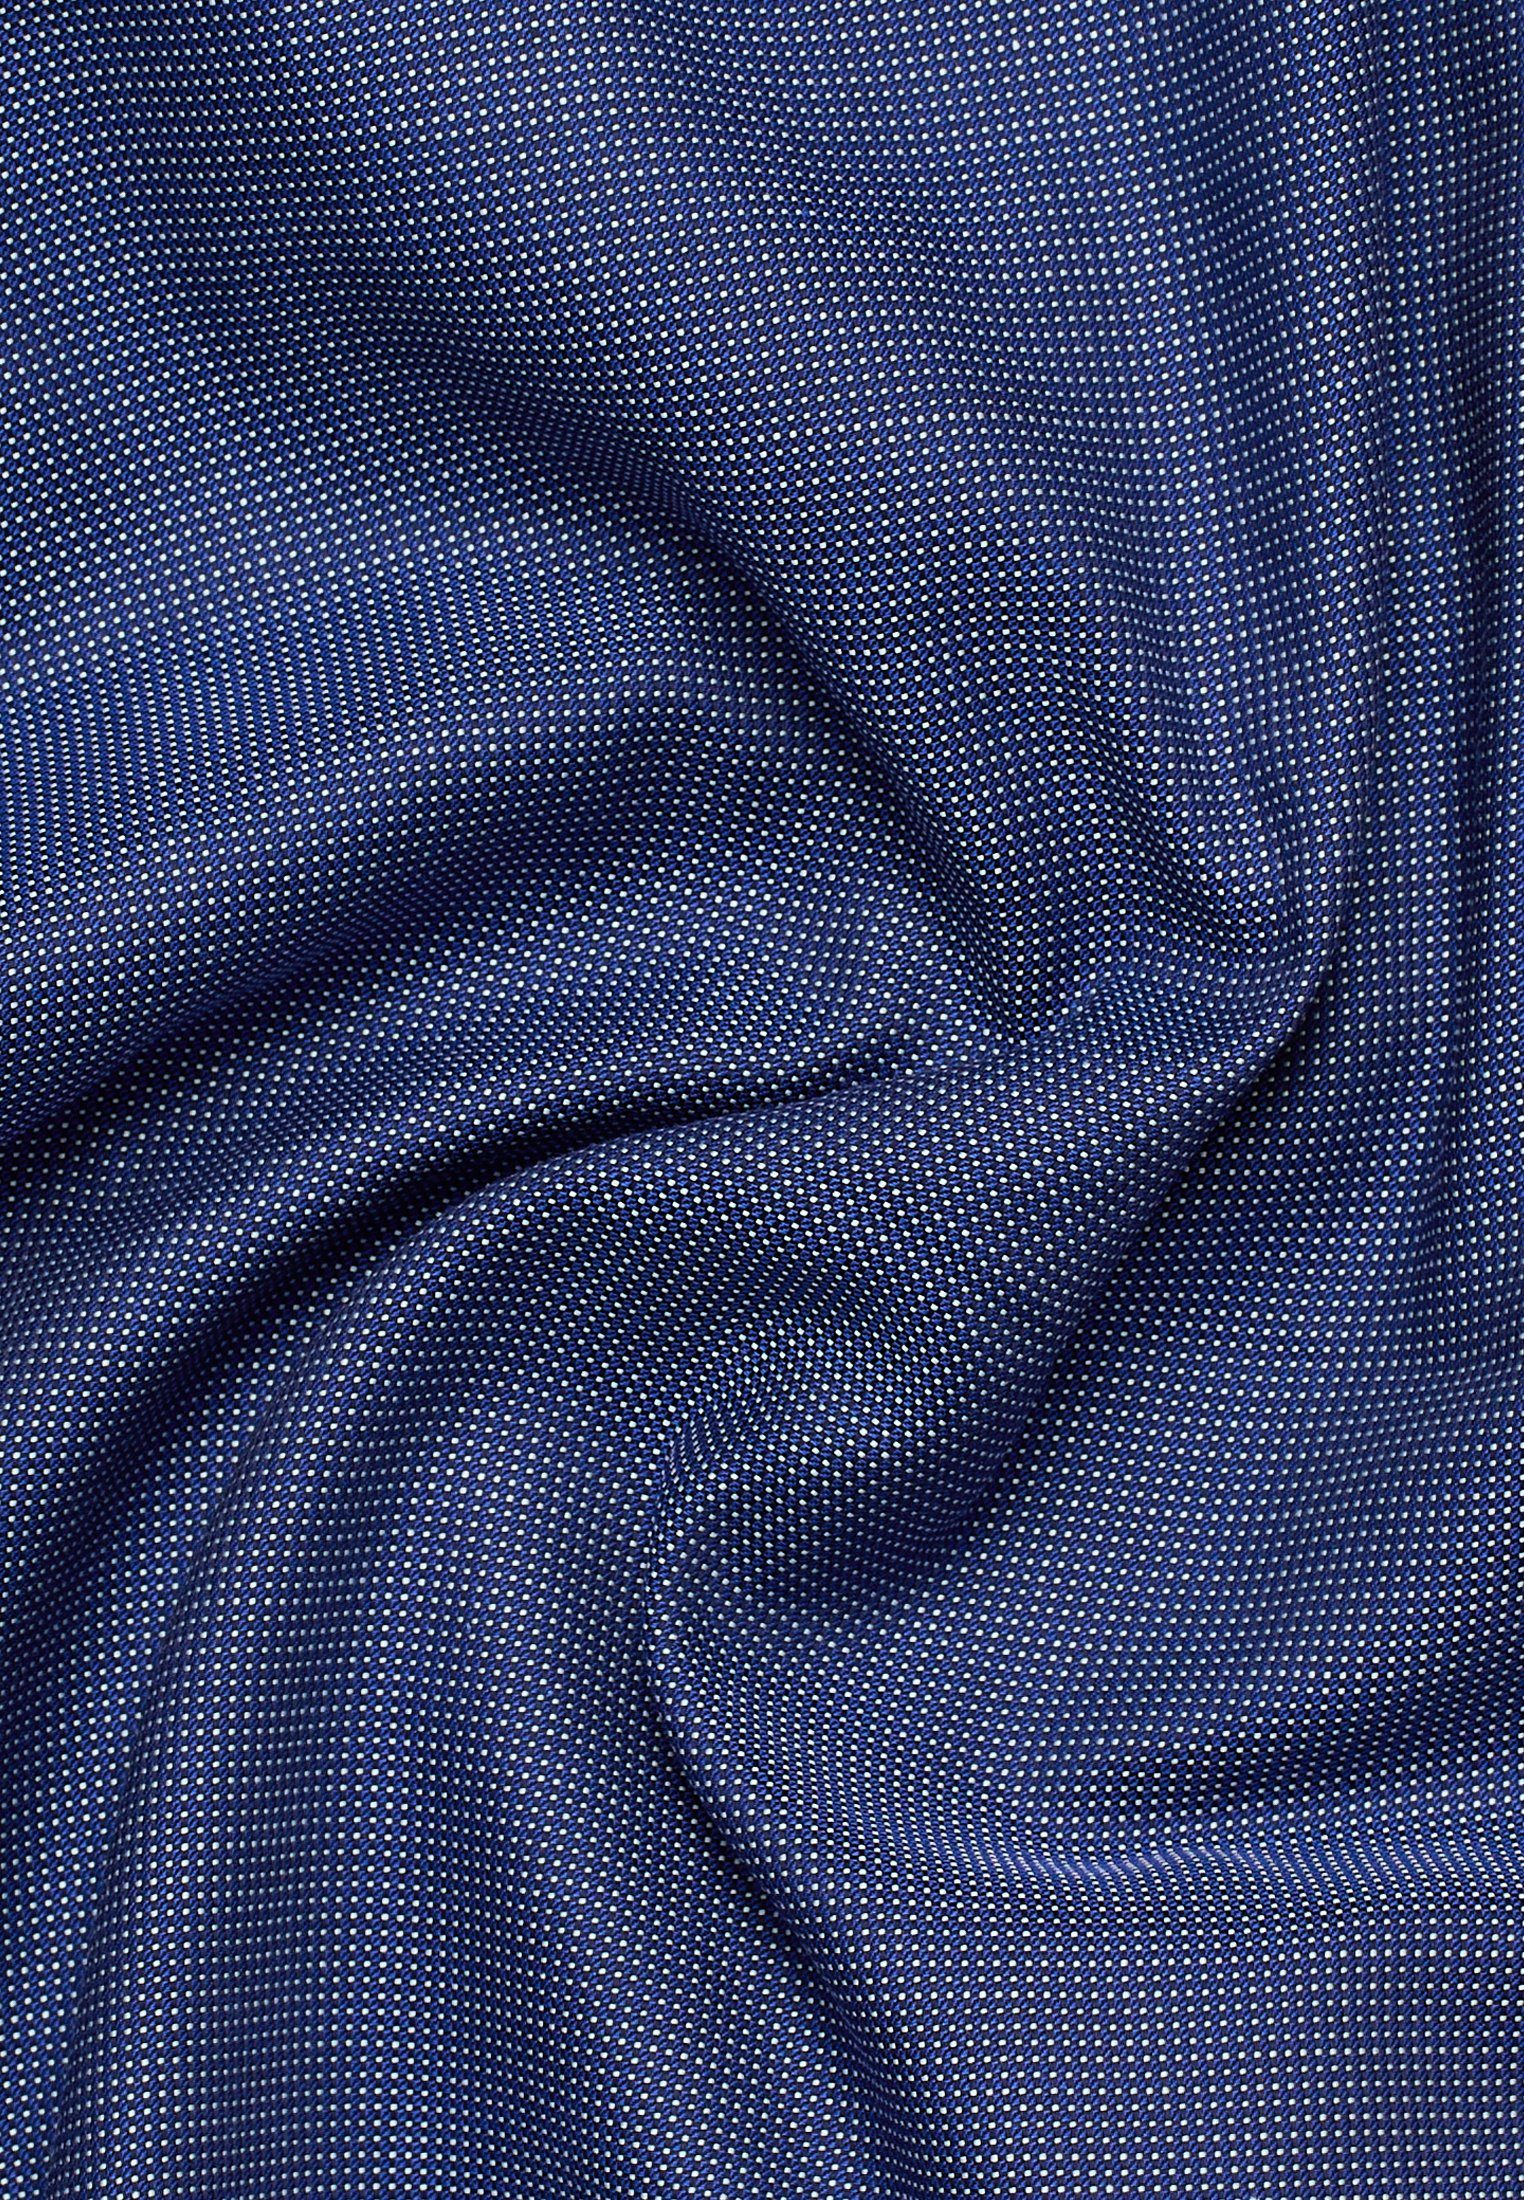 FIT blau COMFORT Eterna Langarmhemd